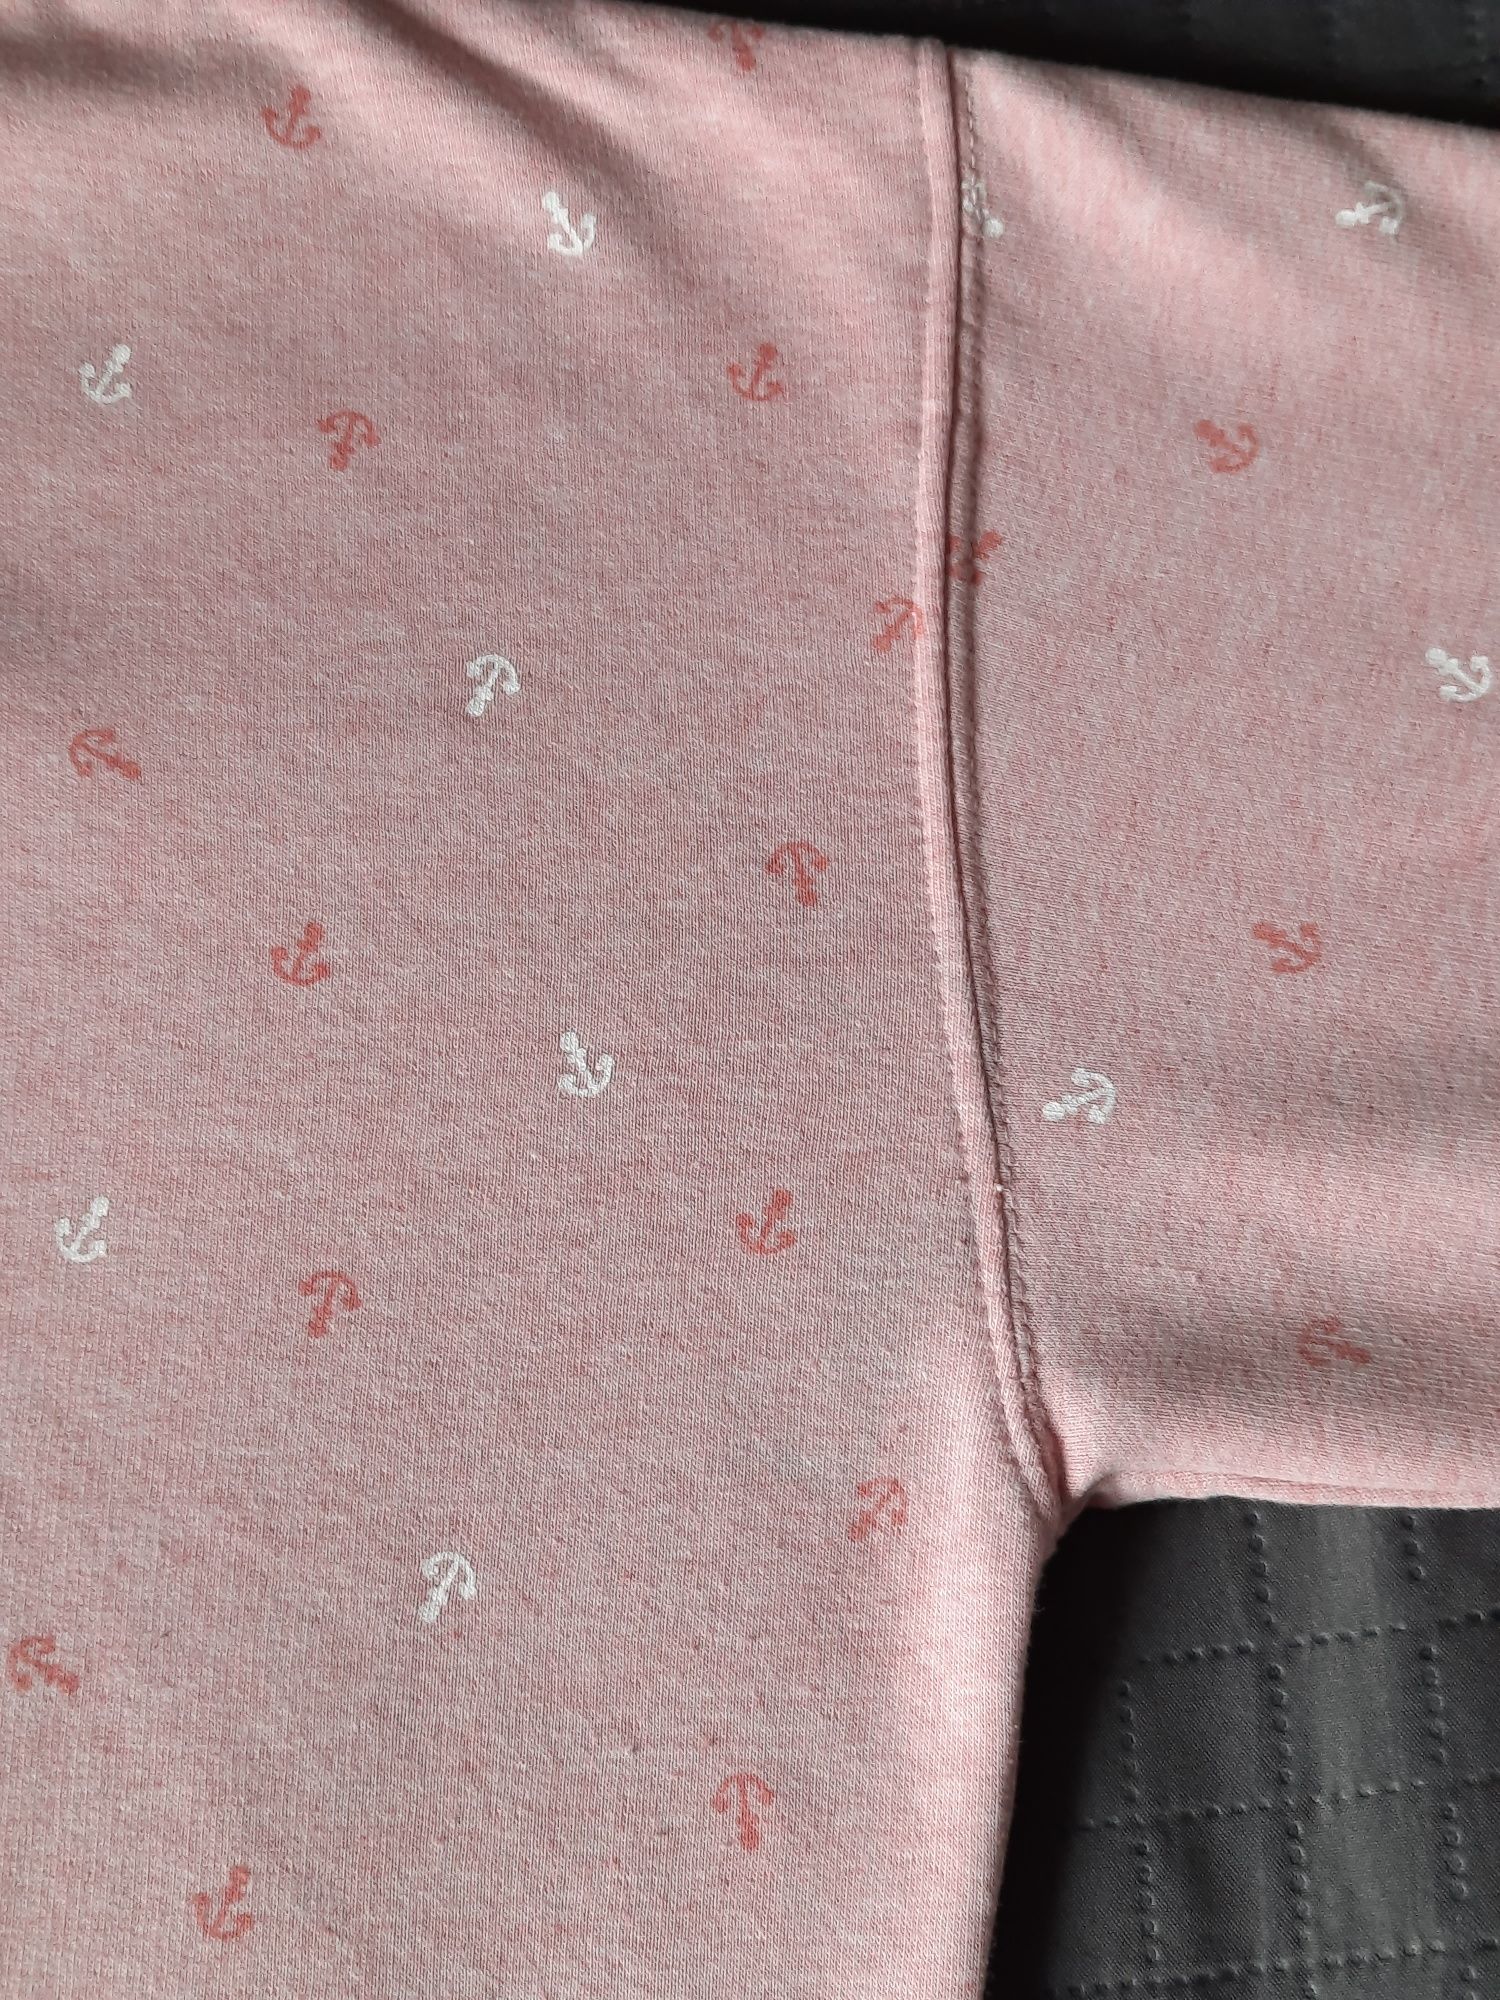 Bluza z kapturem Gina roz.48, 50, XXL